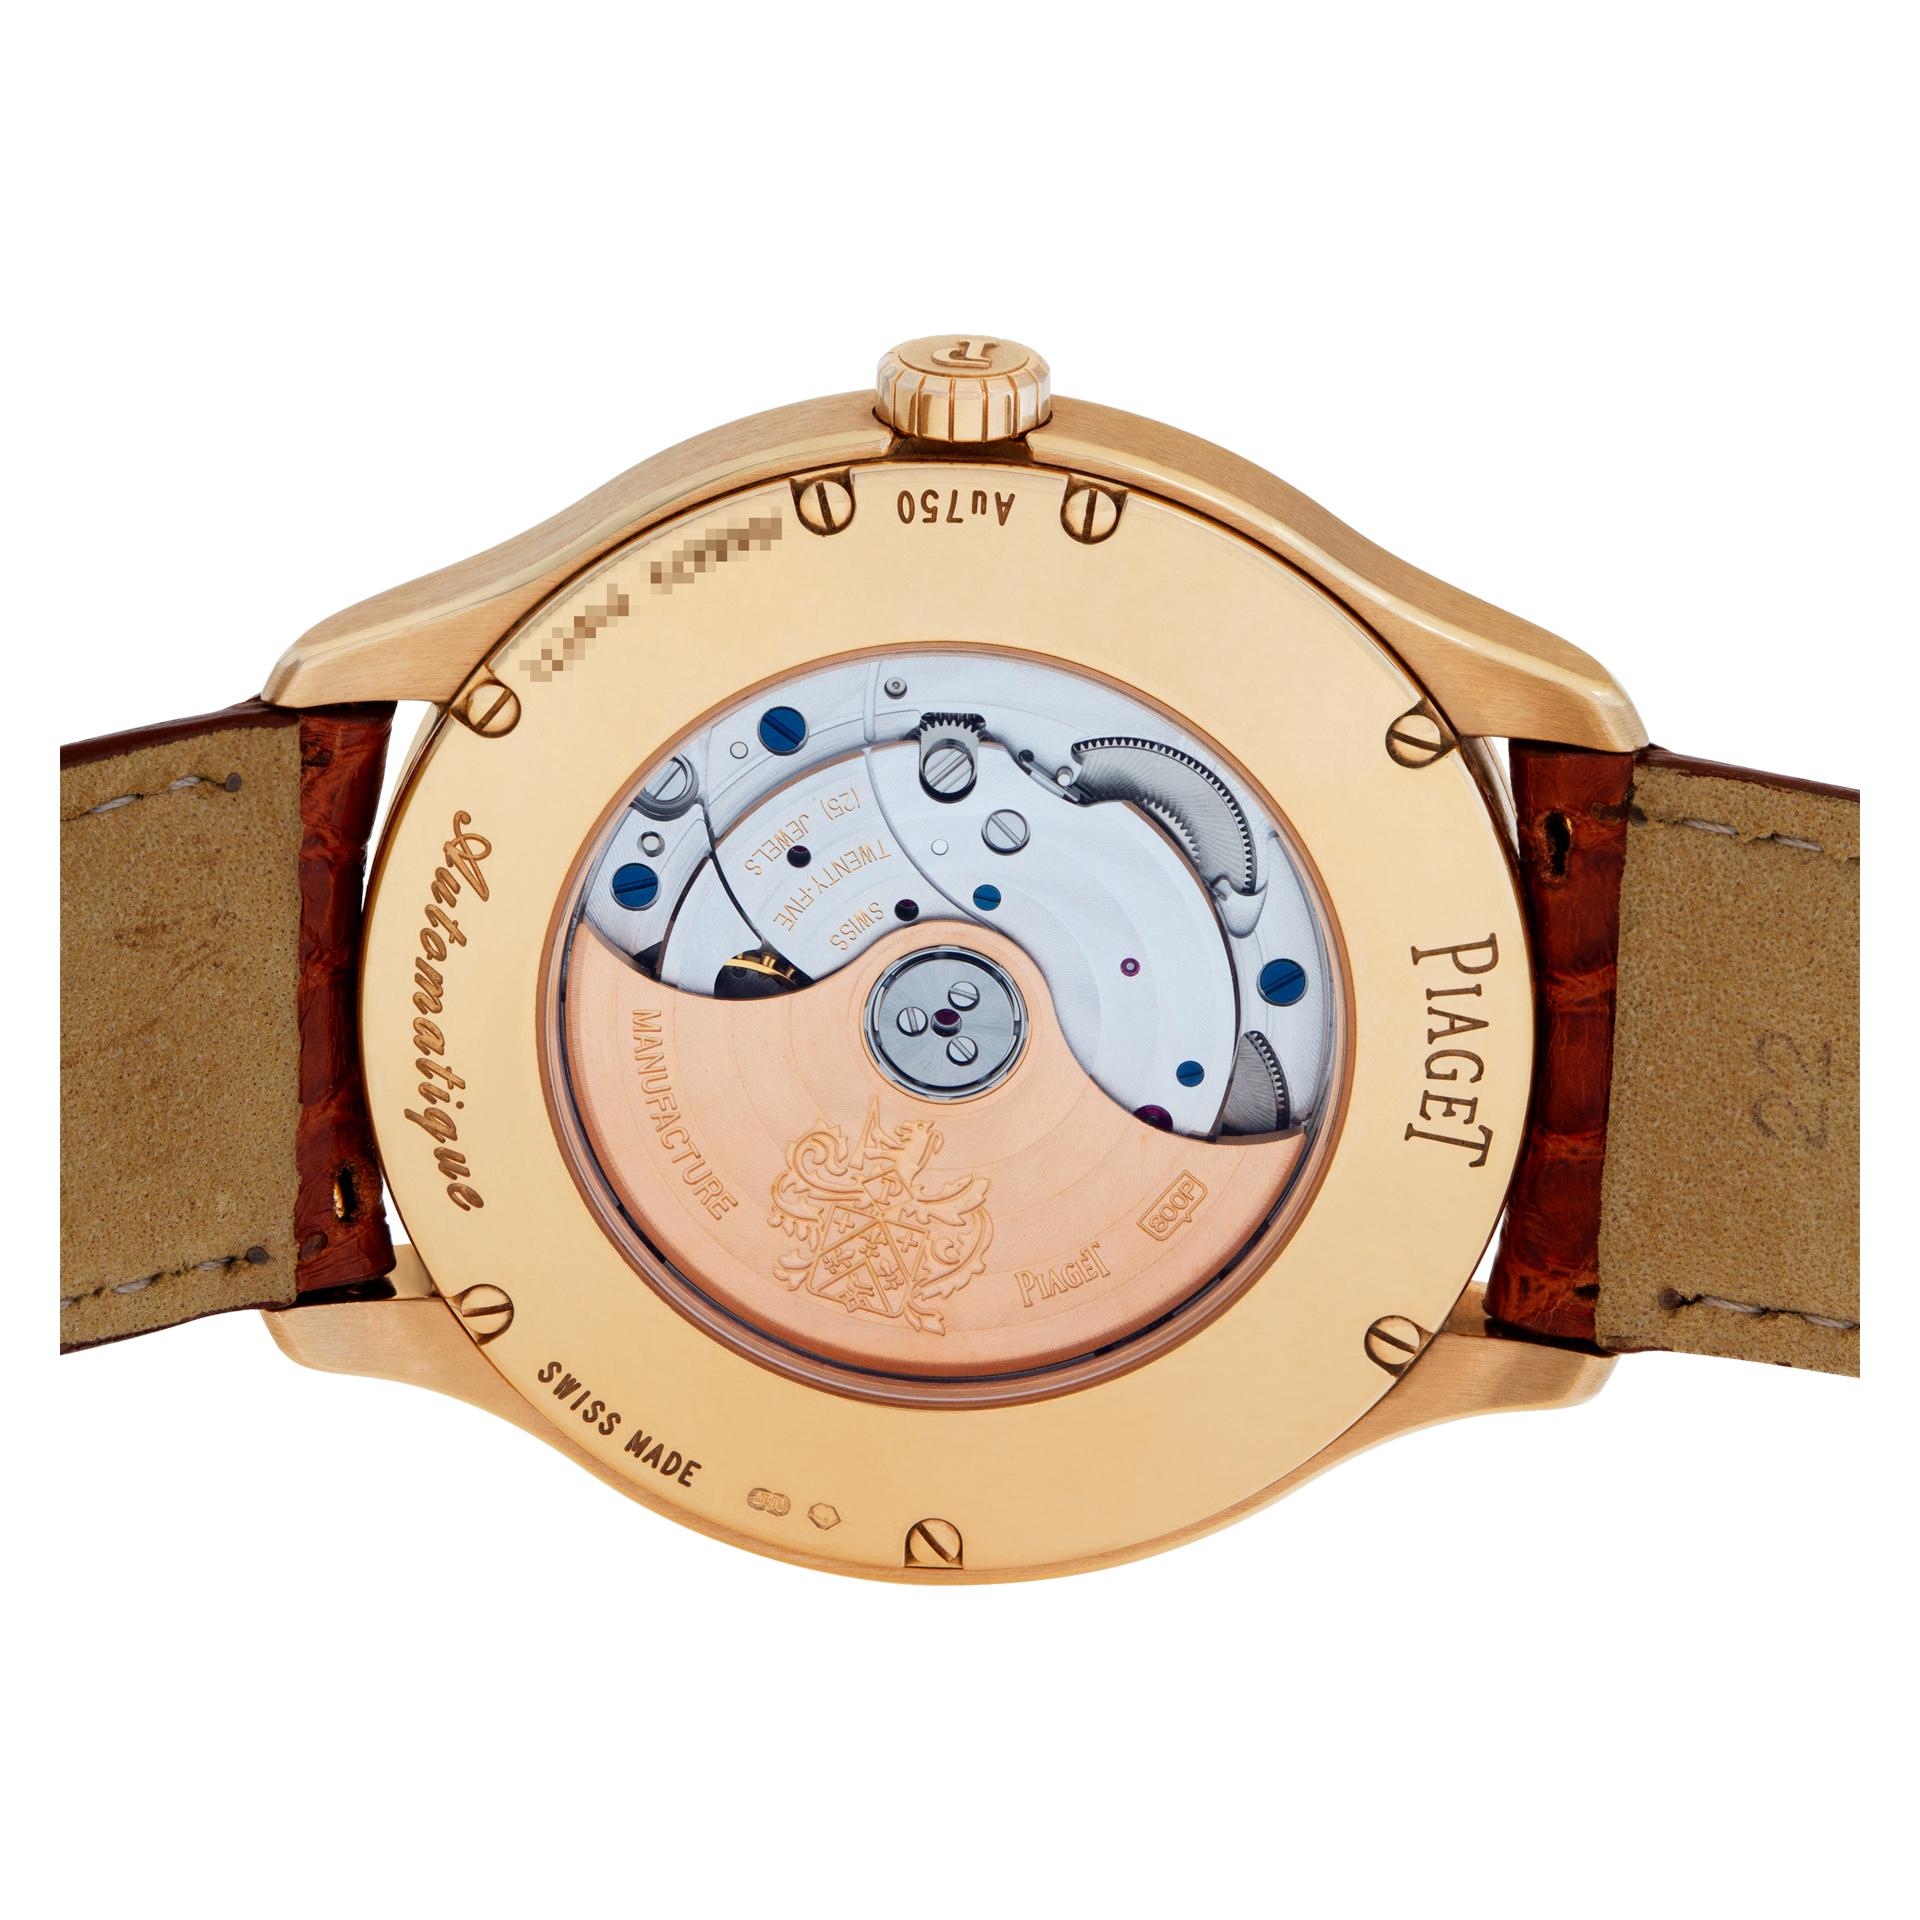 Piaget Gouverneur in 18k Rose Gold Wristwatch, Ref. GOA37110 1